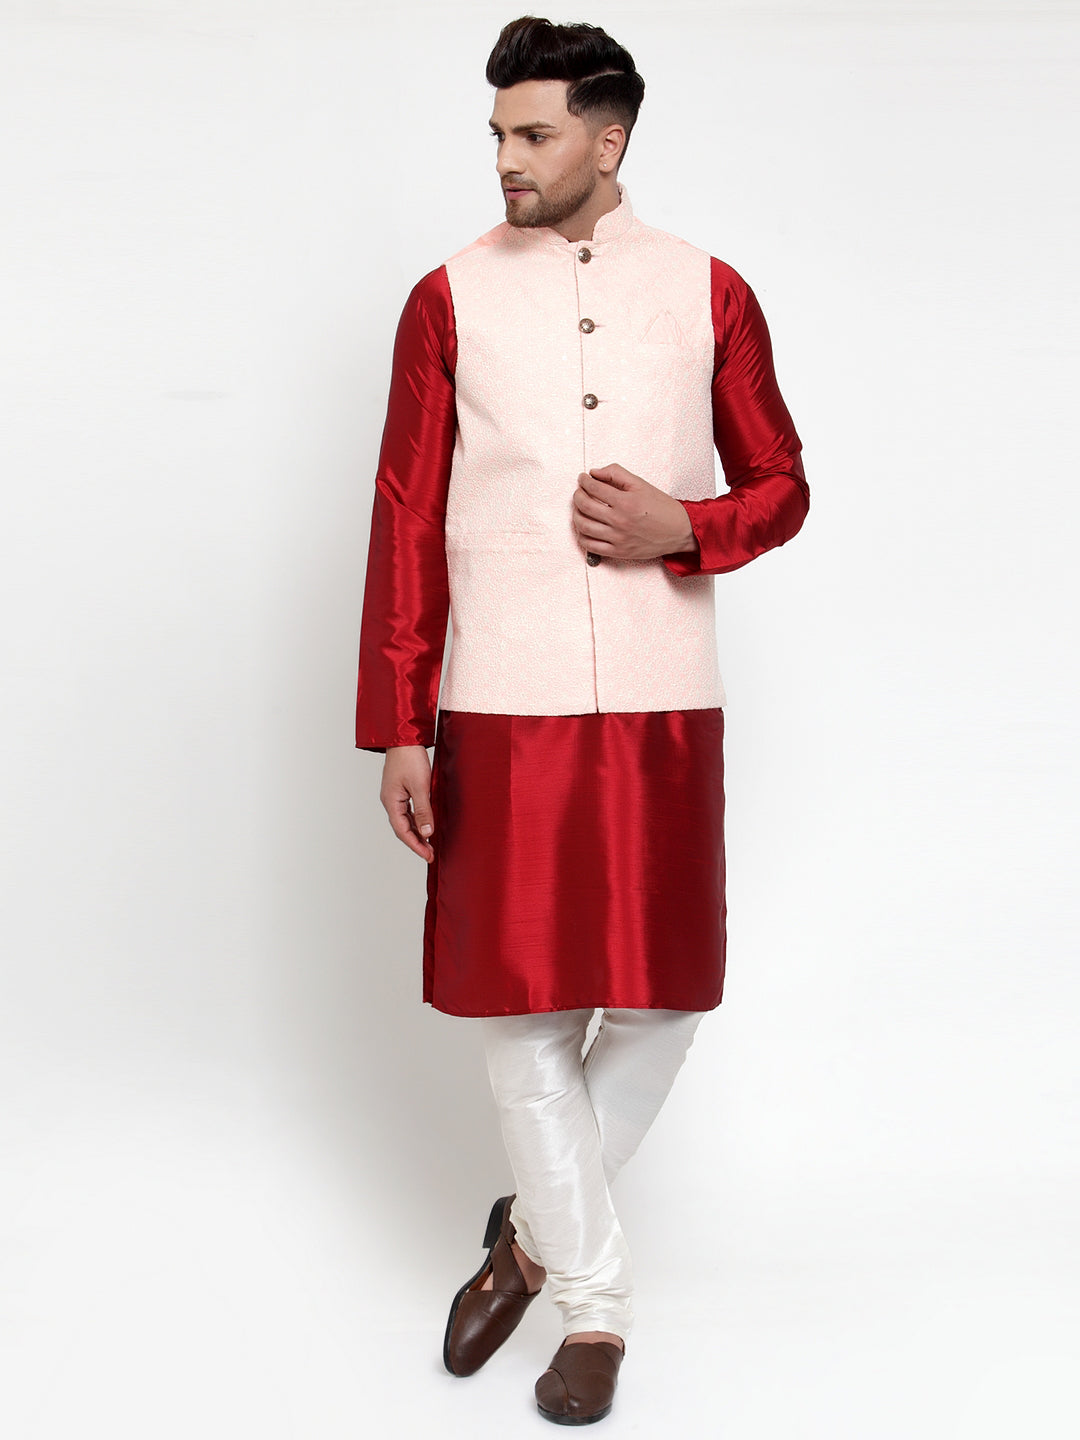 Jompers Men's Solid Dupion Kurta Pajama with Embroiderd Nehru Jacket